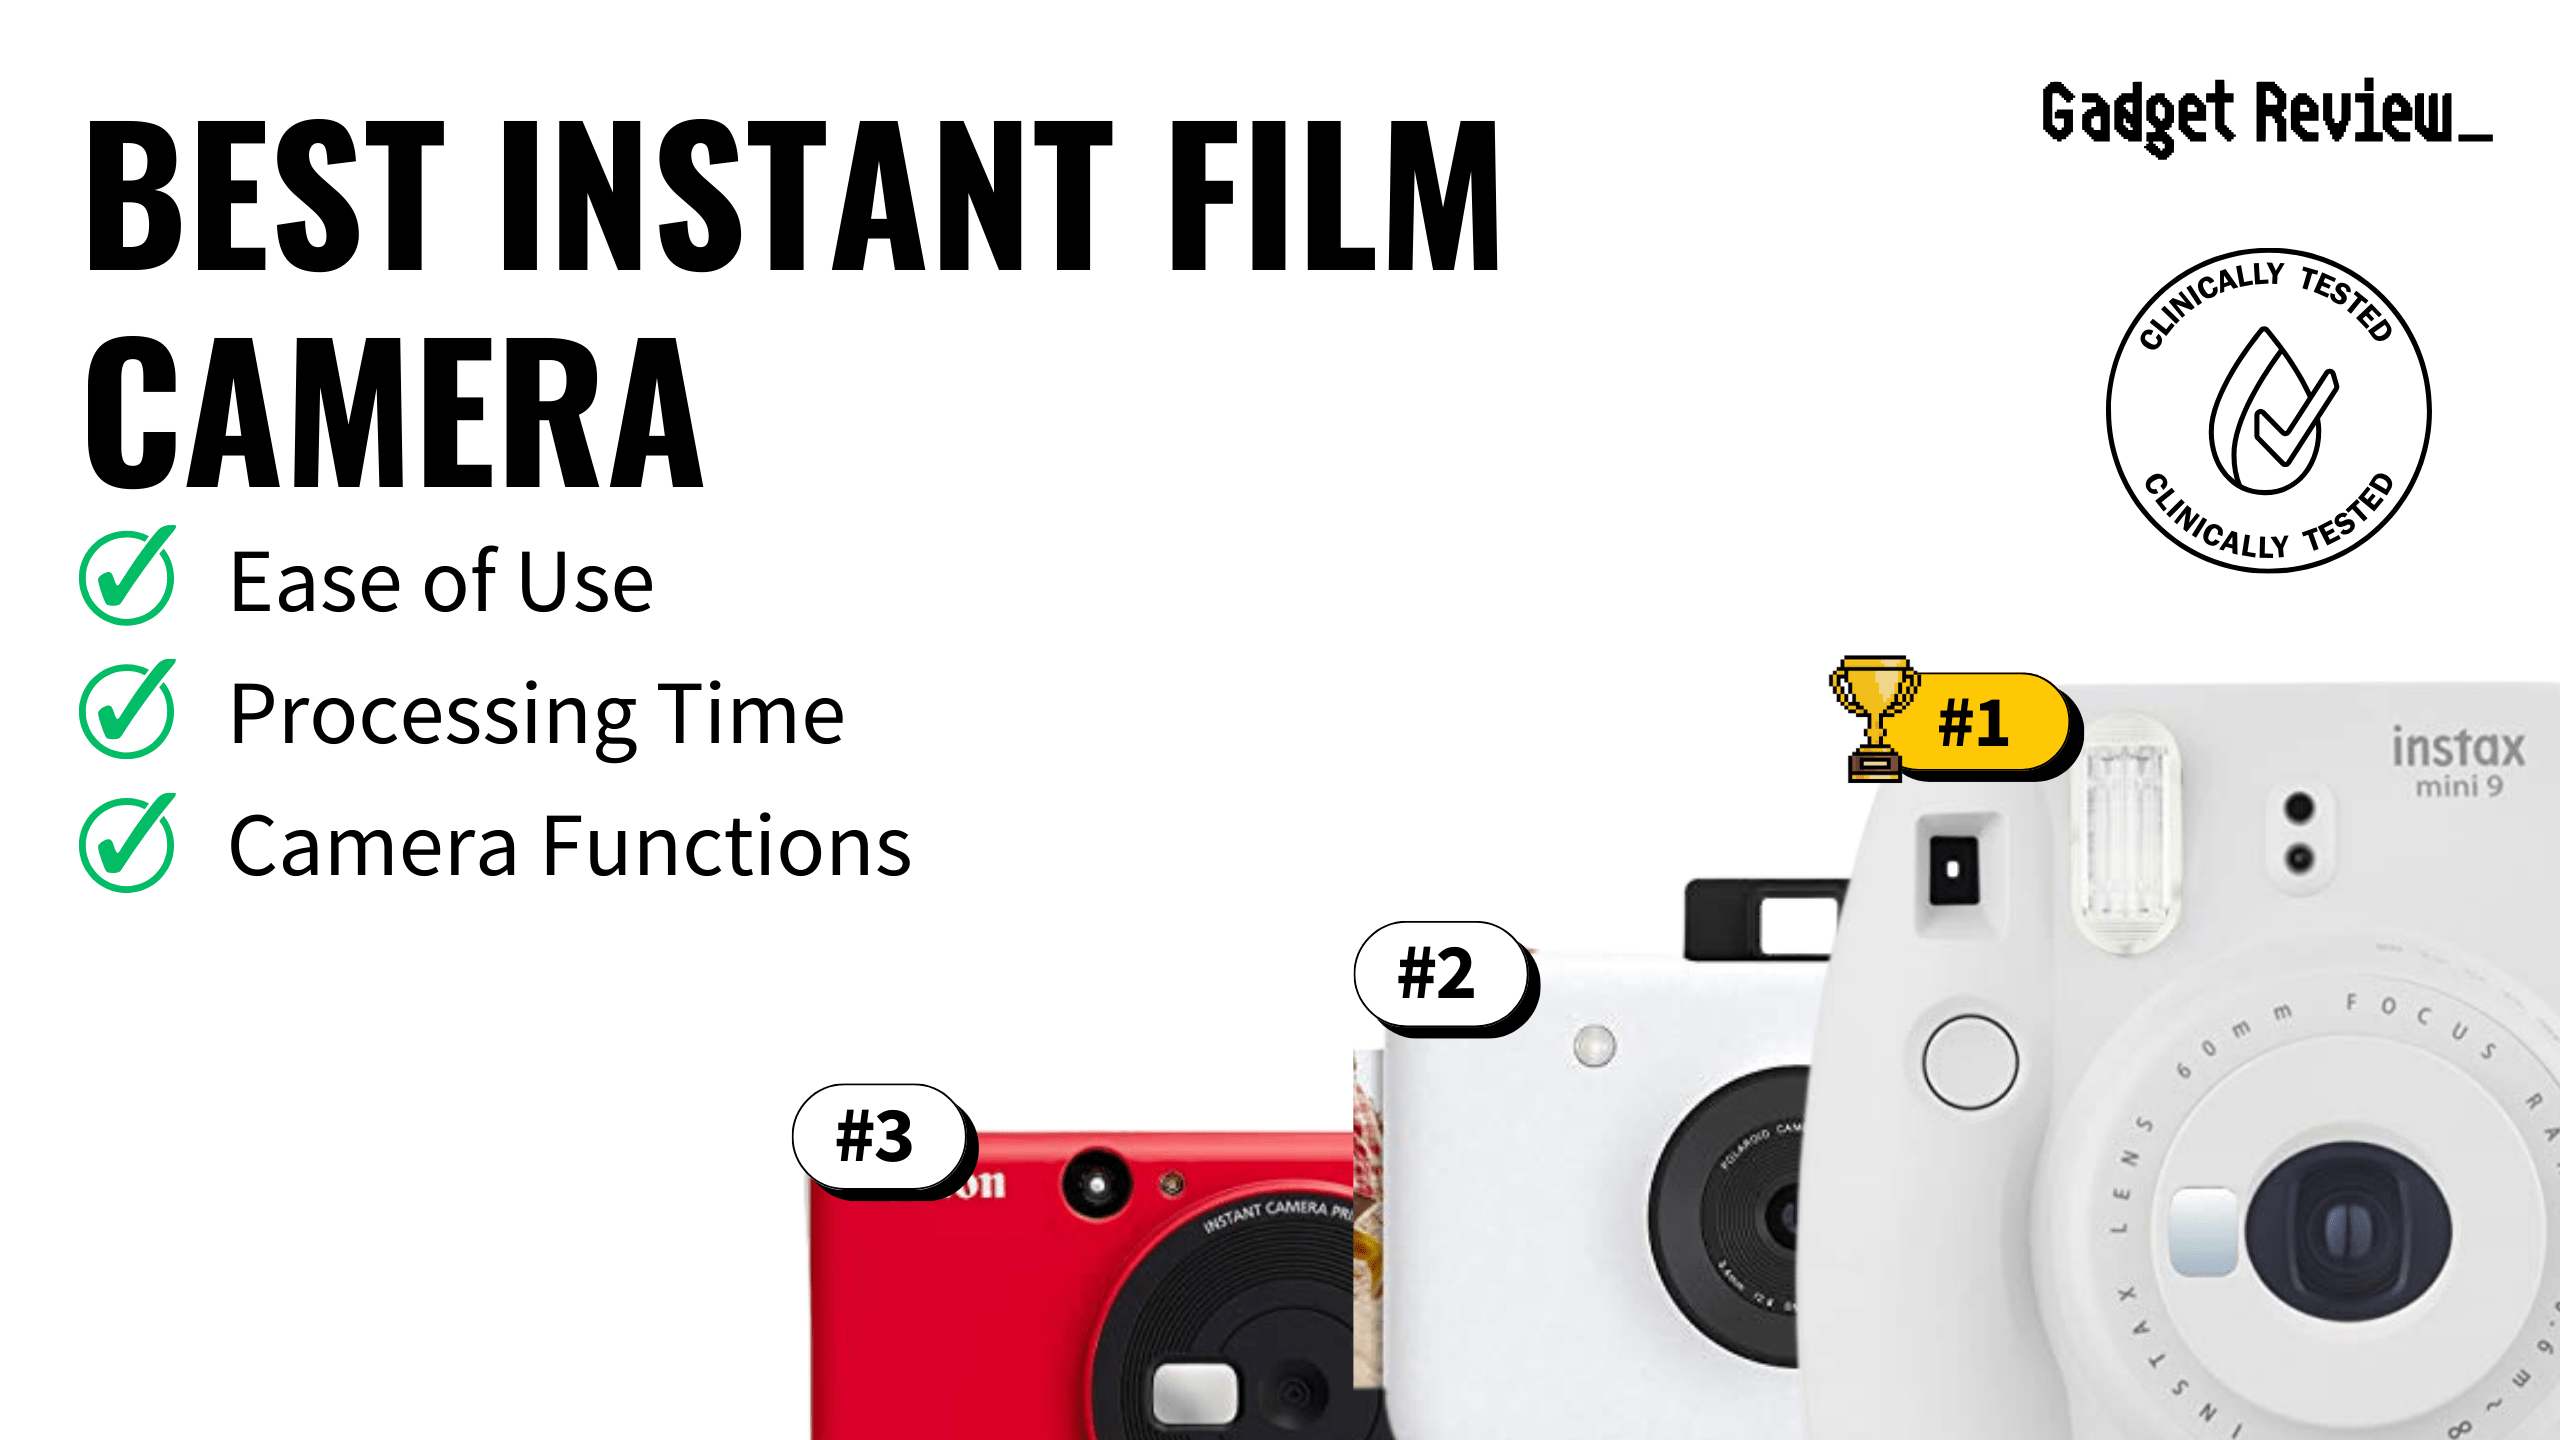 Review: Polaroid Z2300 digital instant camera